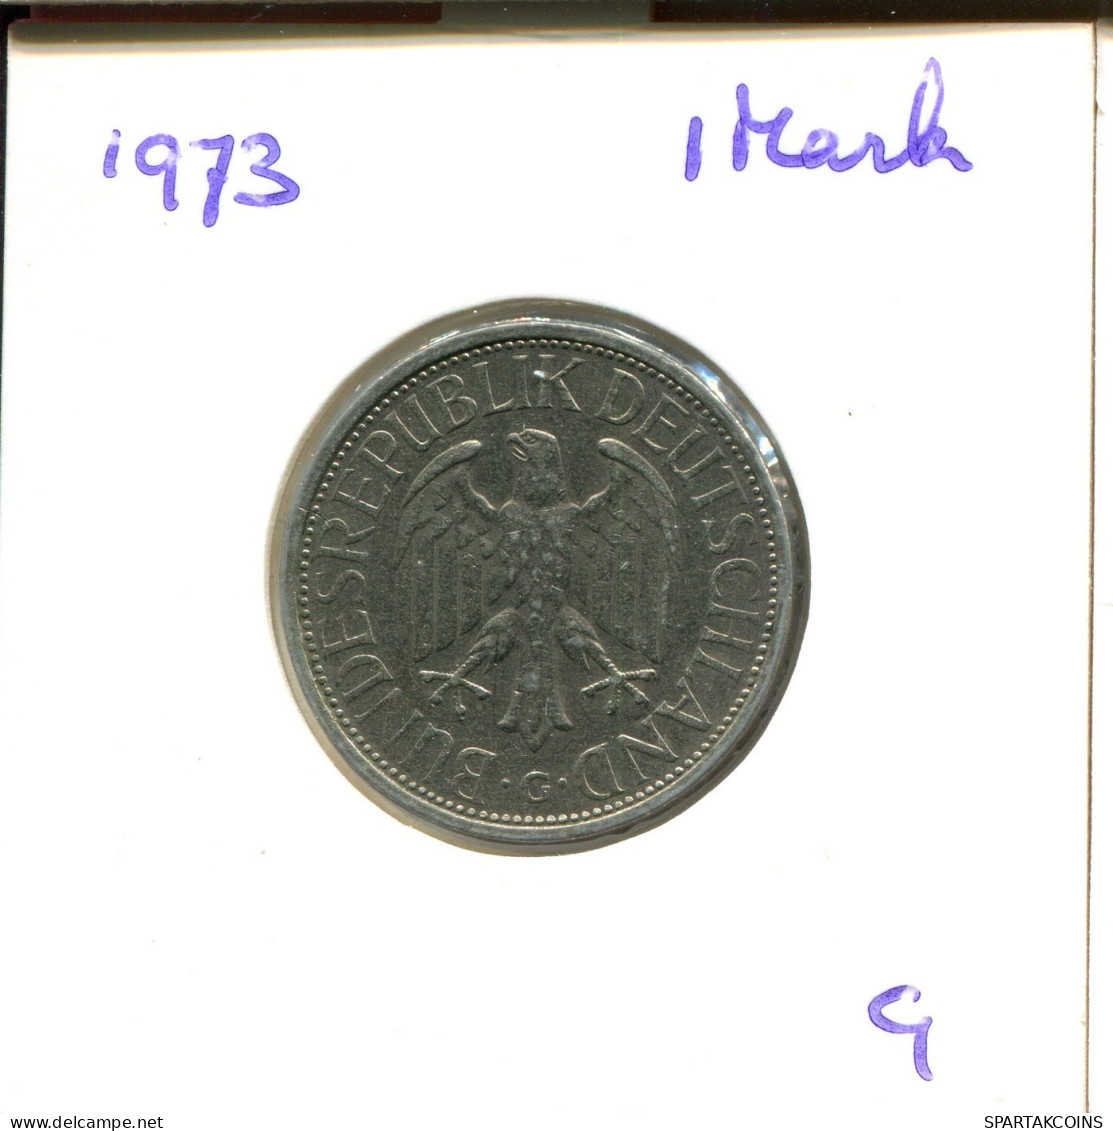 1 DM 1973 G WEST & UNIFIED GERMANY Coin #DA845.U.A - 1 Mark